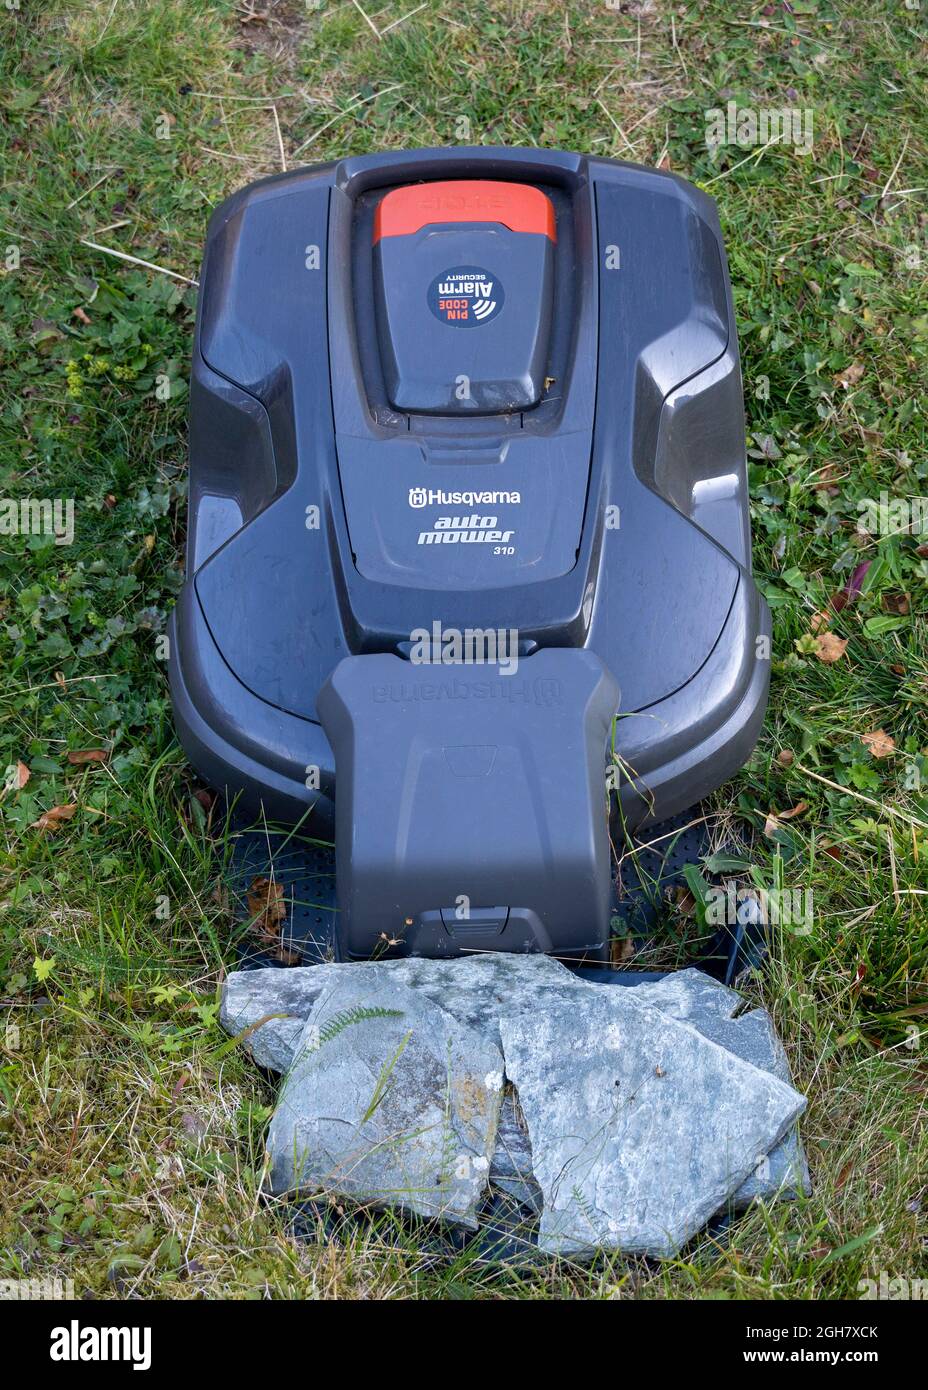 Husqvarna Auto Mower 310 robot lawn mower Stock Photo - Alamy